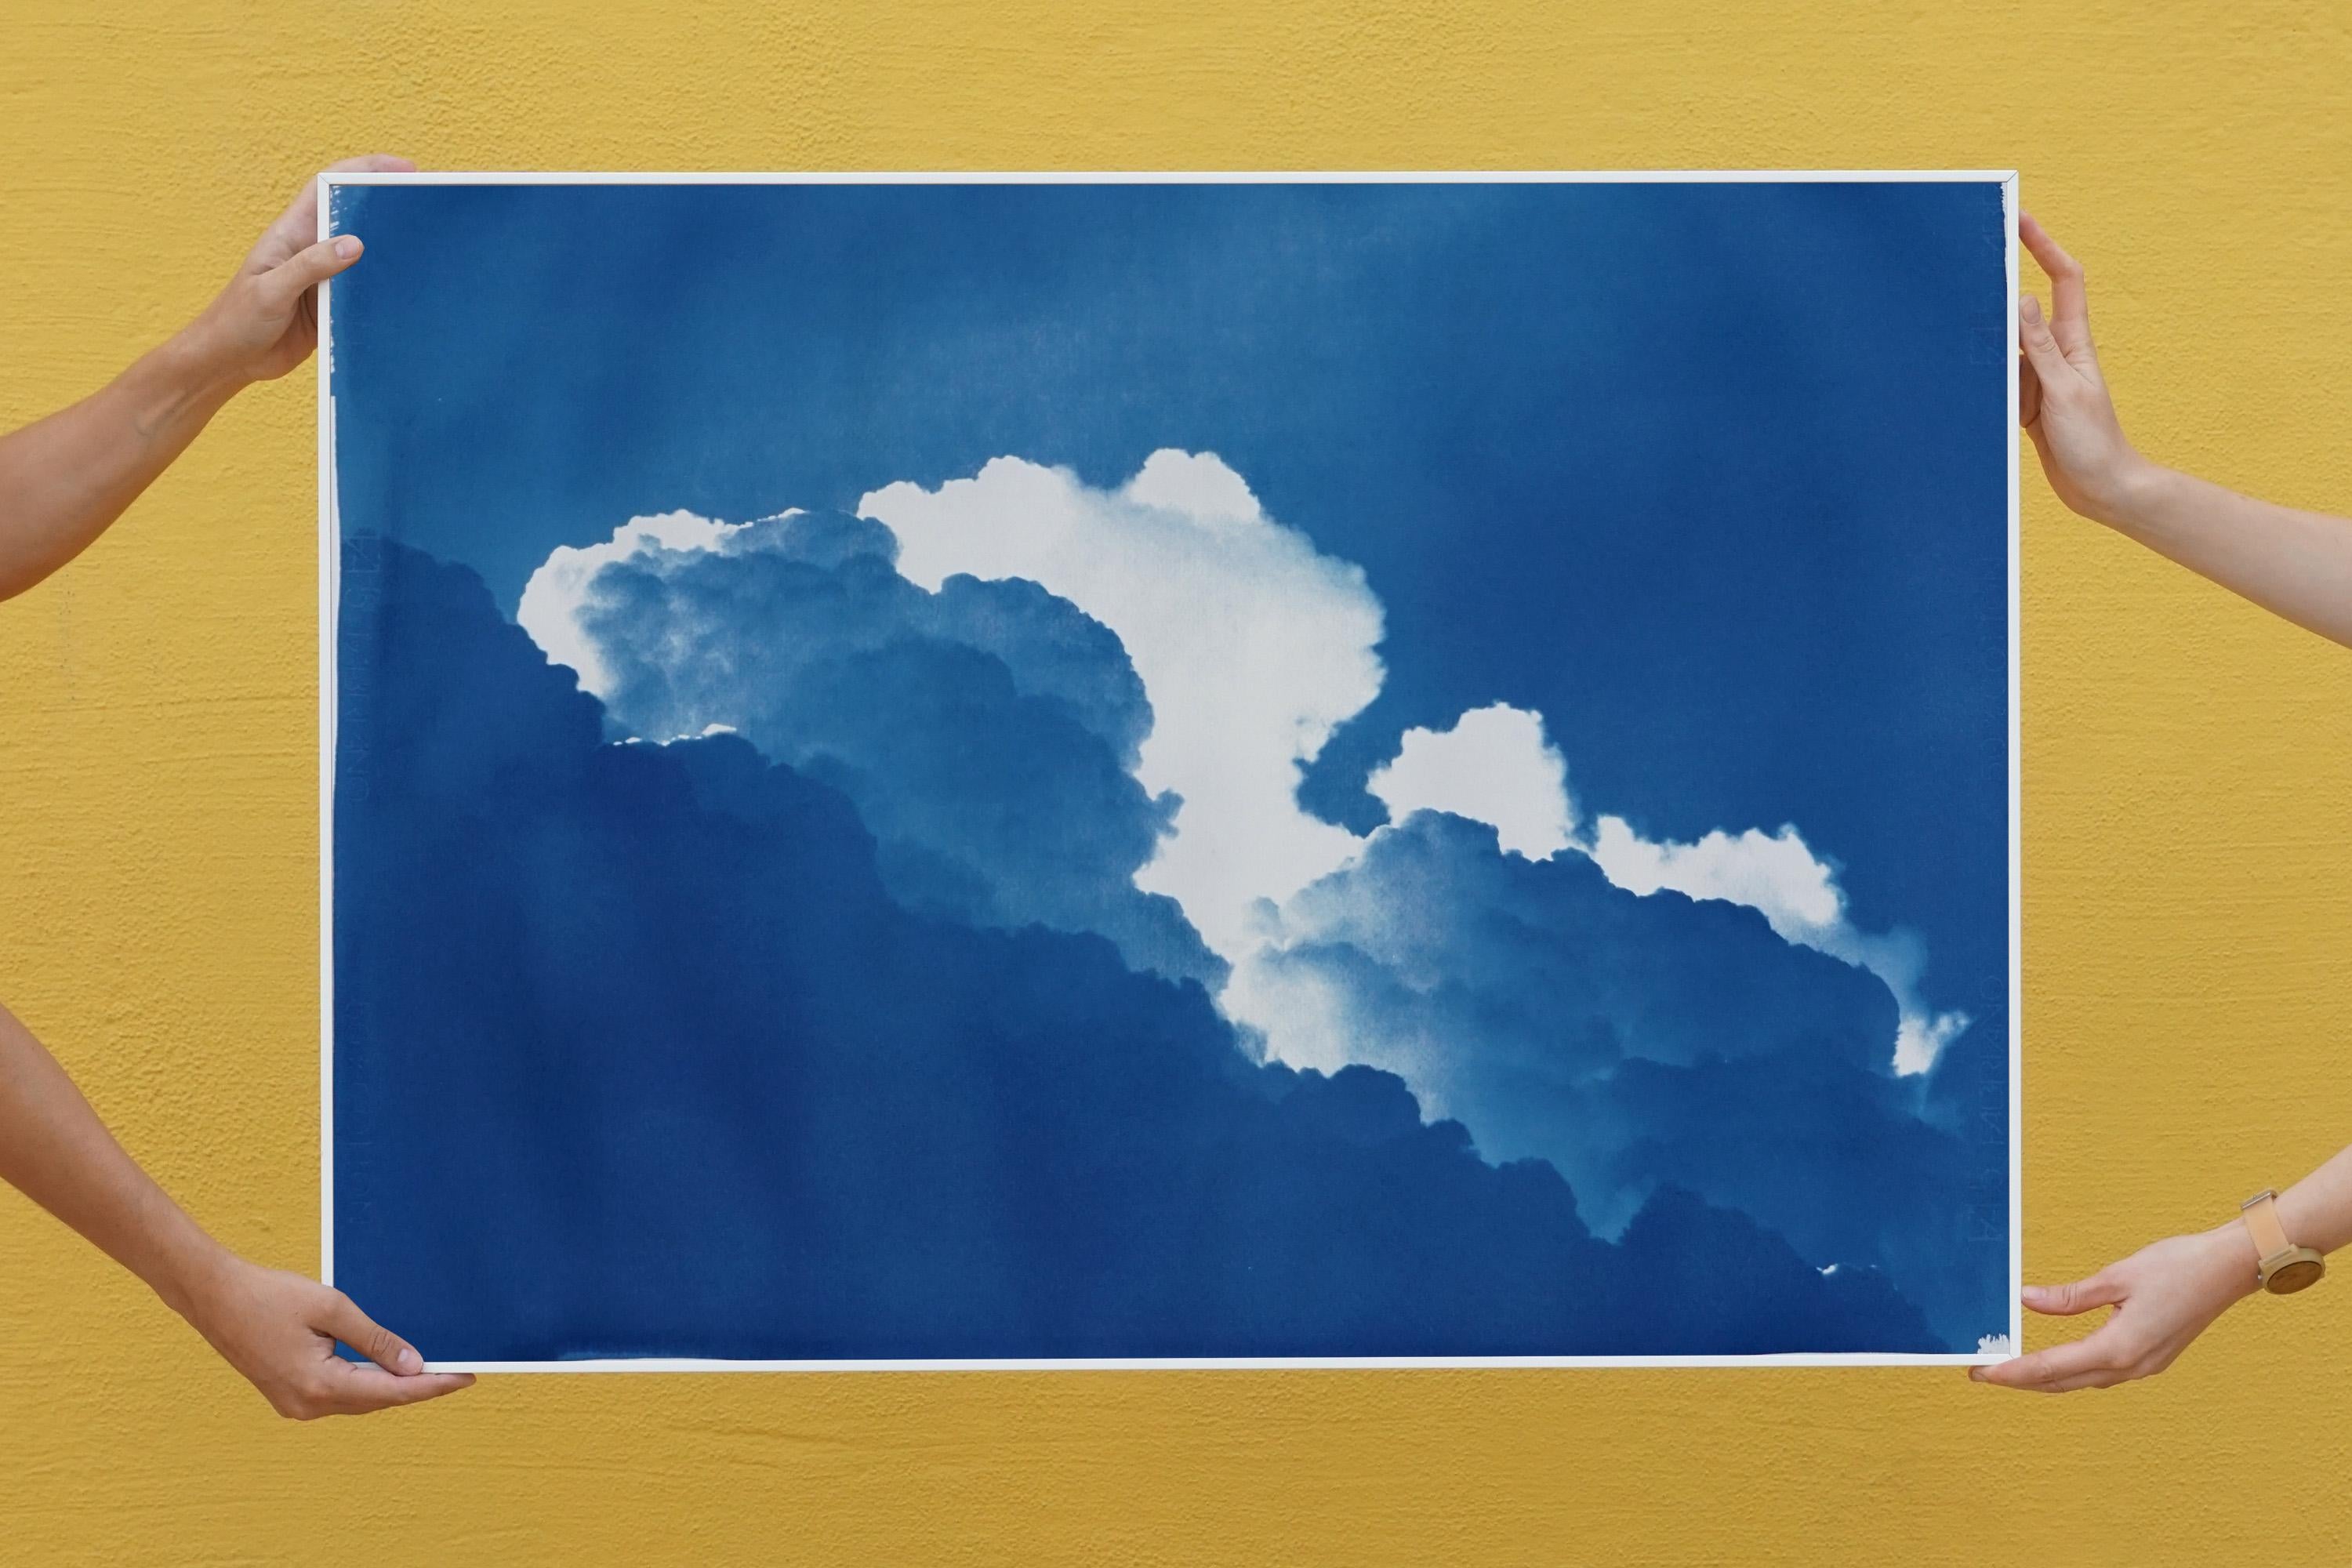 Yves Klein Clouds, Cyanotype on Watercolor Paper, 100x70cm, Blue Art, Landscape  2